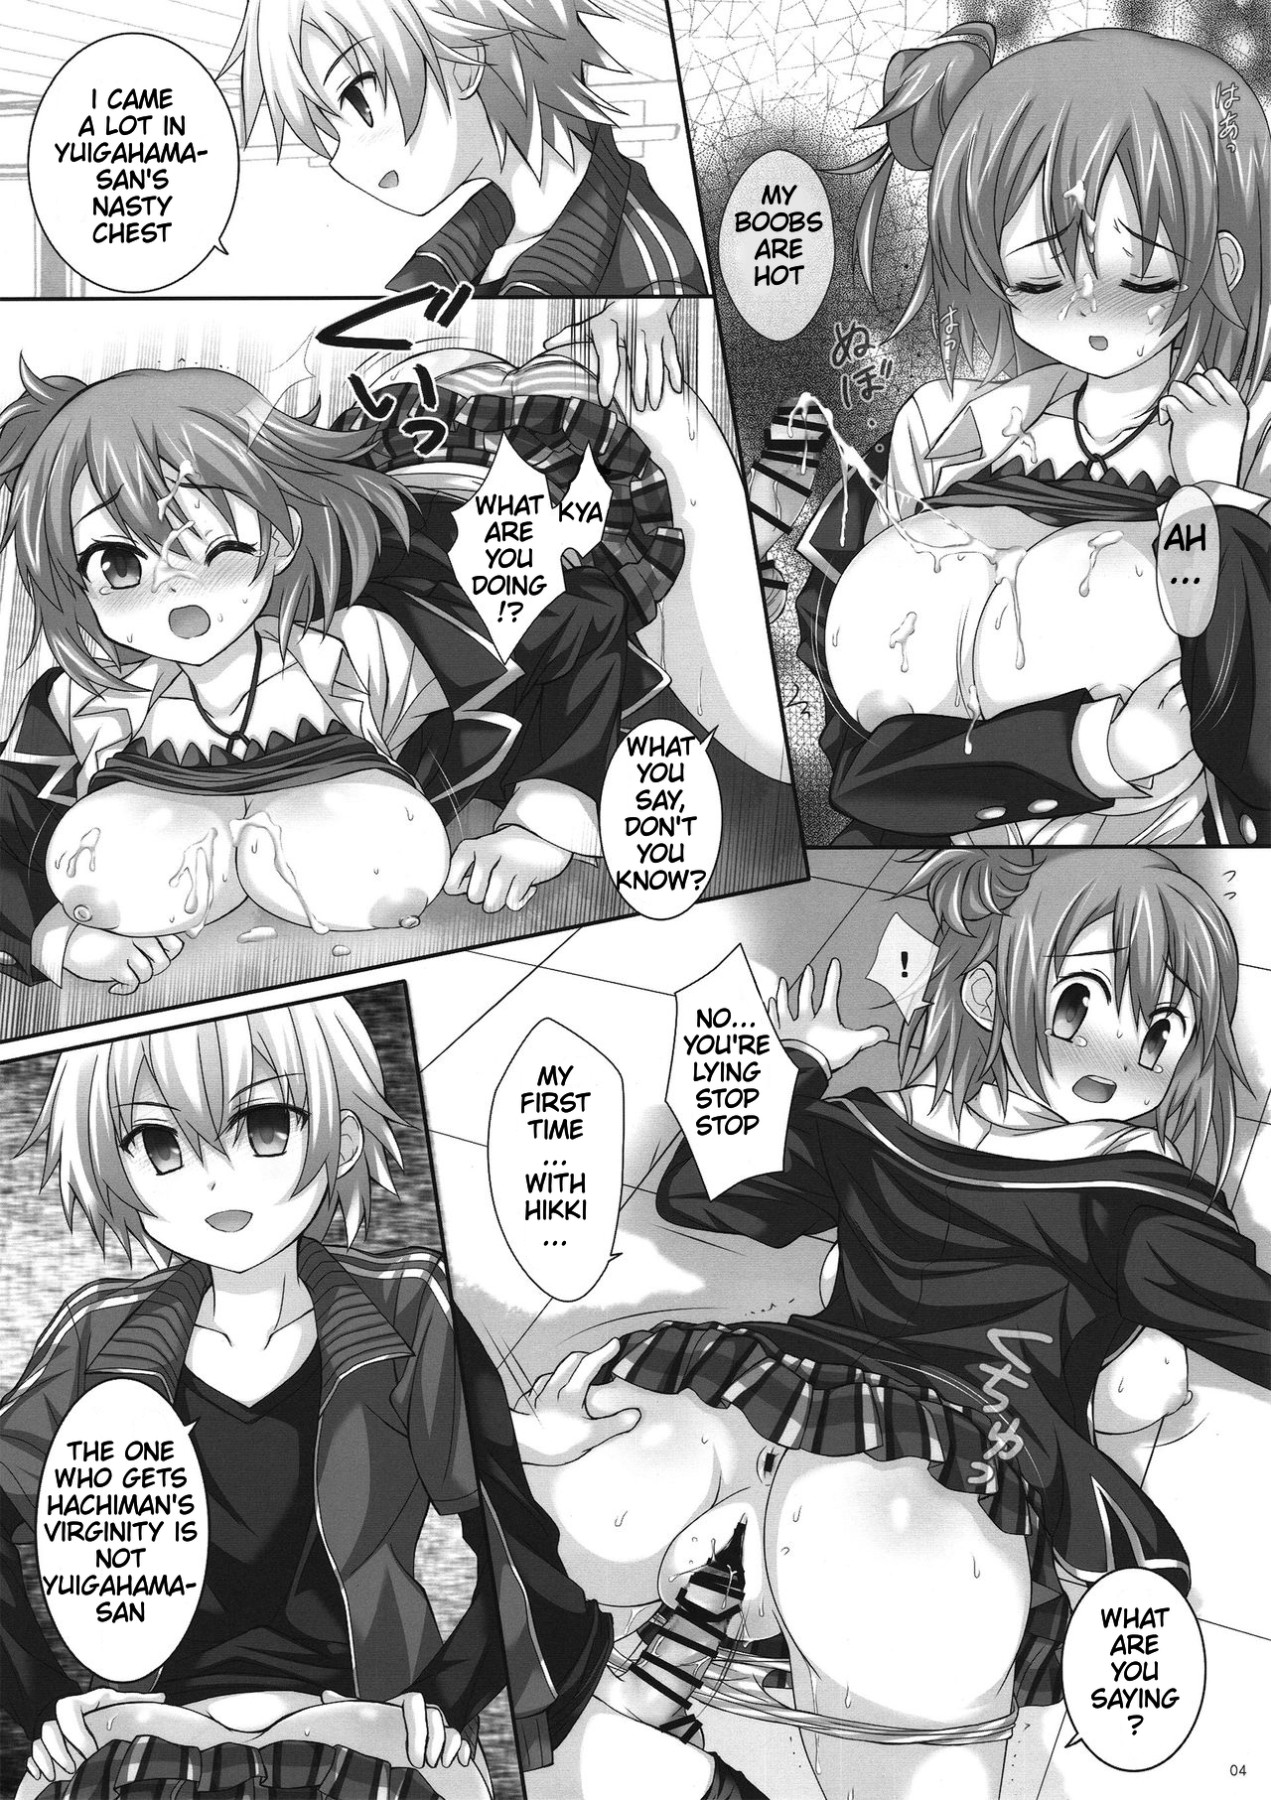 Hentai Manga Comic-My NTR Plan Was Just Getting Started-Read-3